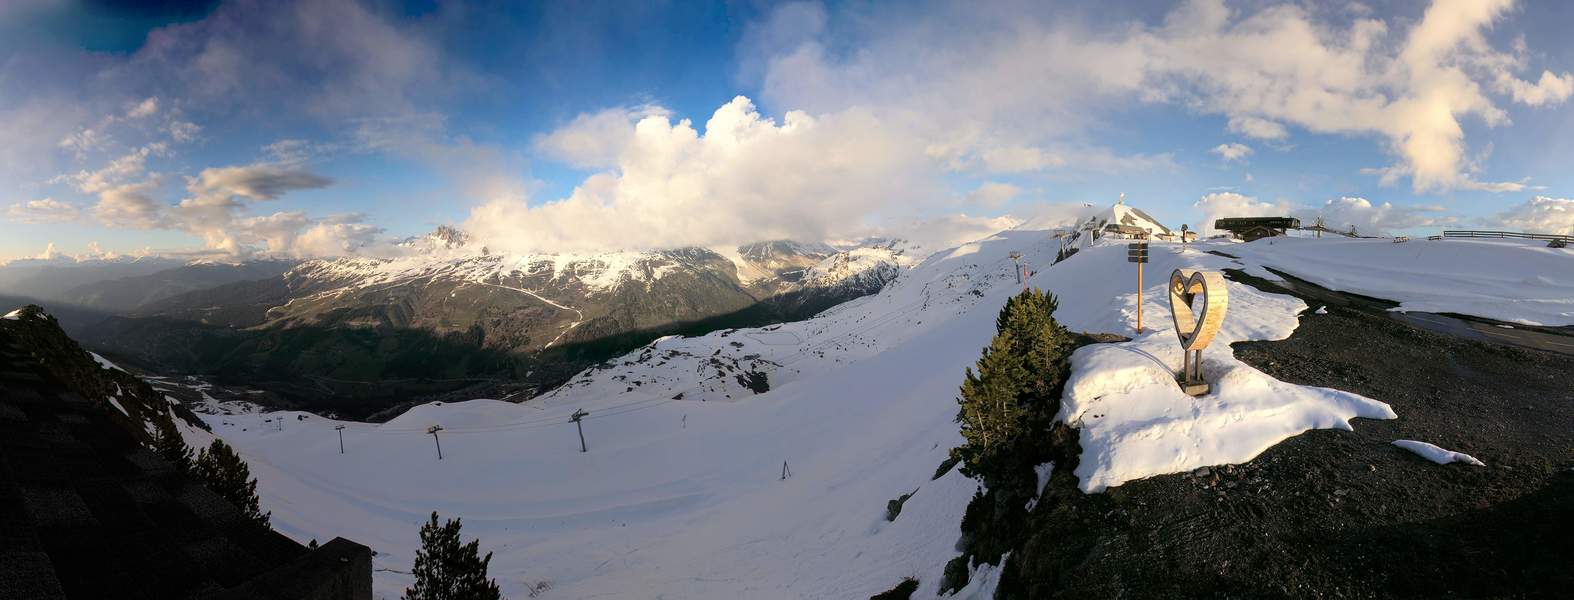 Les Menuires - Meribel webcam - Tougnete ski station 2.434 m